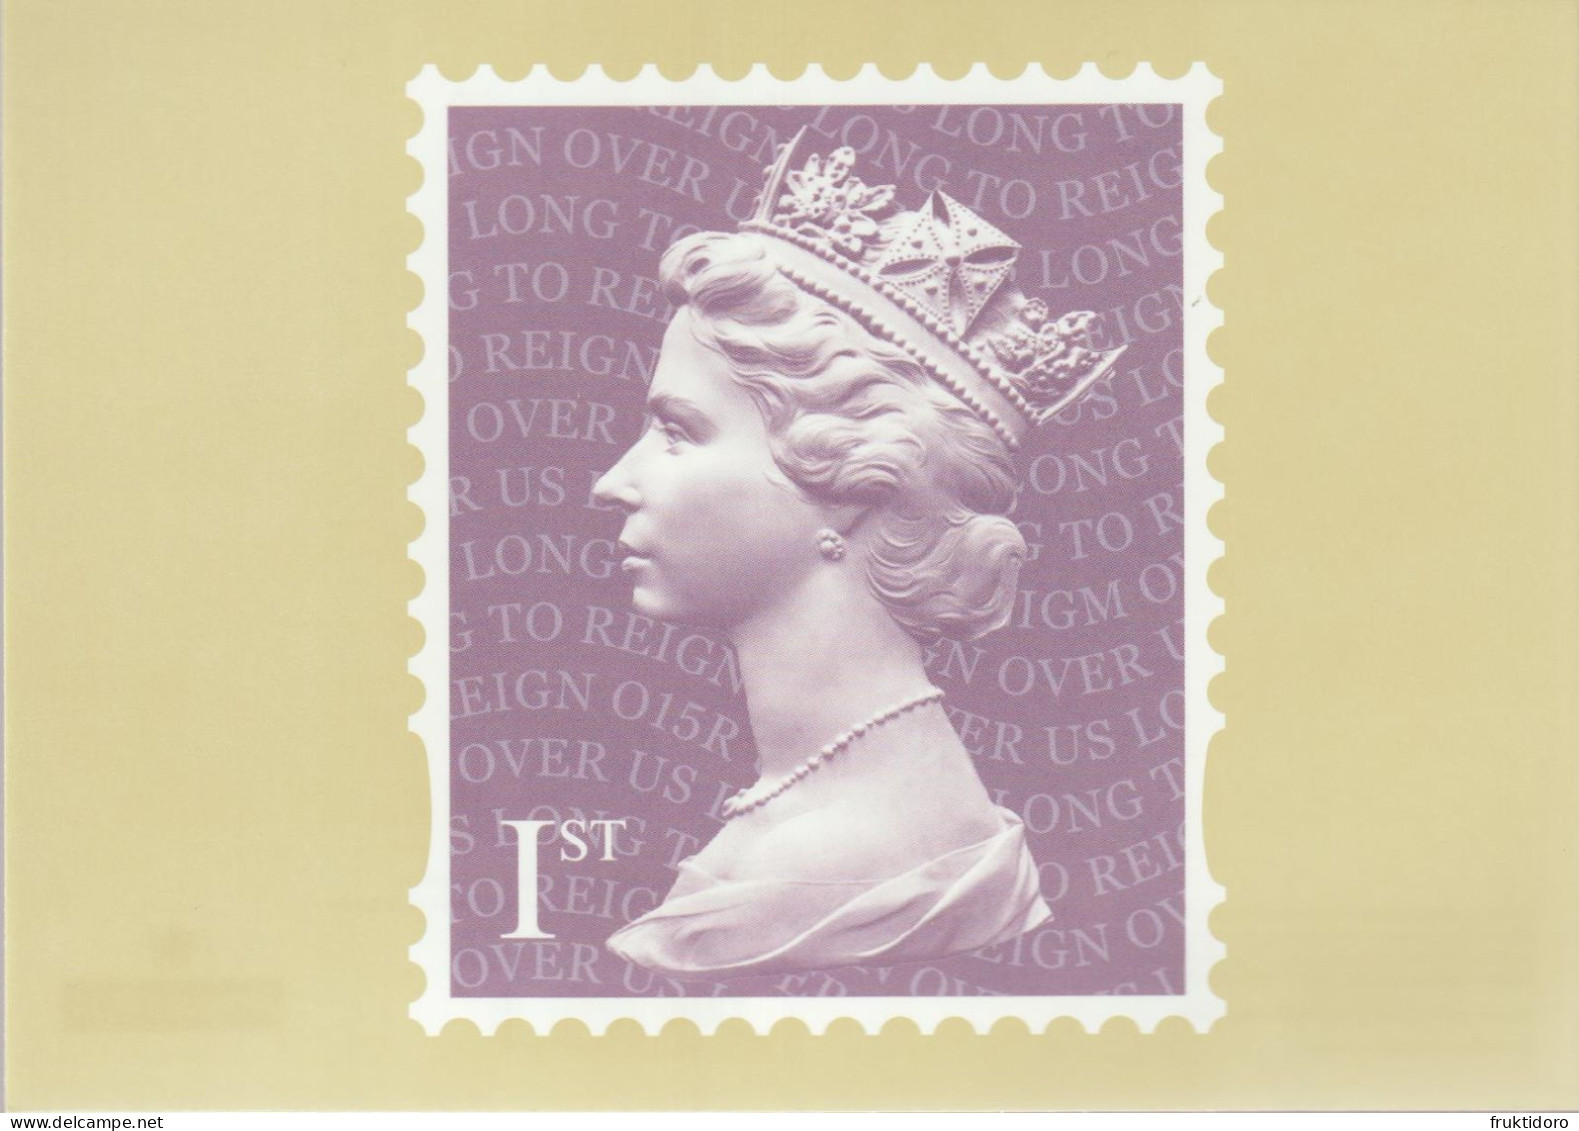 United Kingdom Postcards 2015 About Stamps In Mi Block 96 Queen Elizabeth II - Long To Reign Over Us ** - Verzamelingen